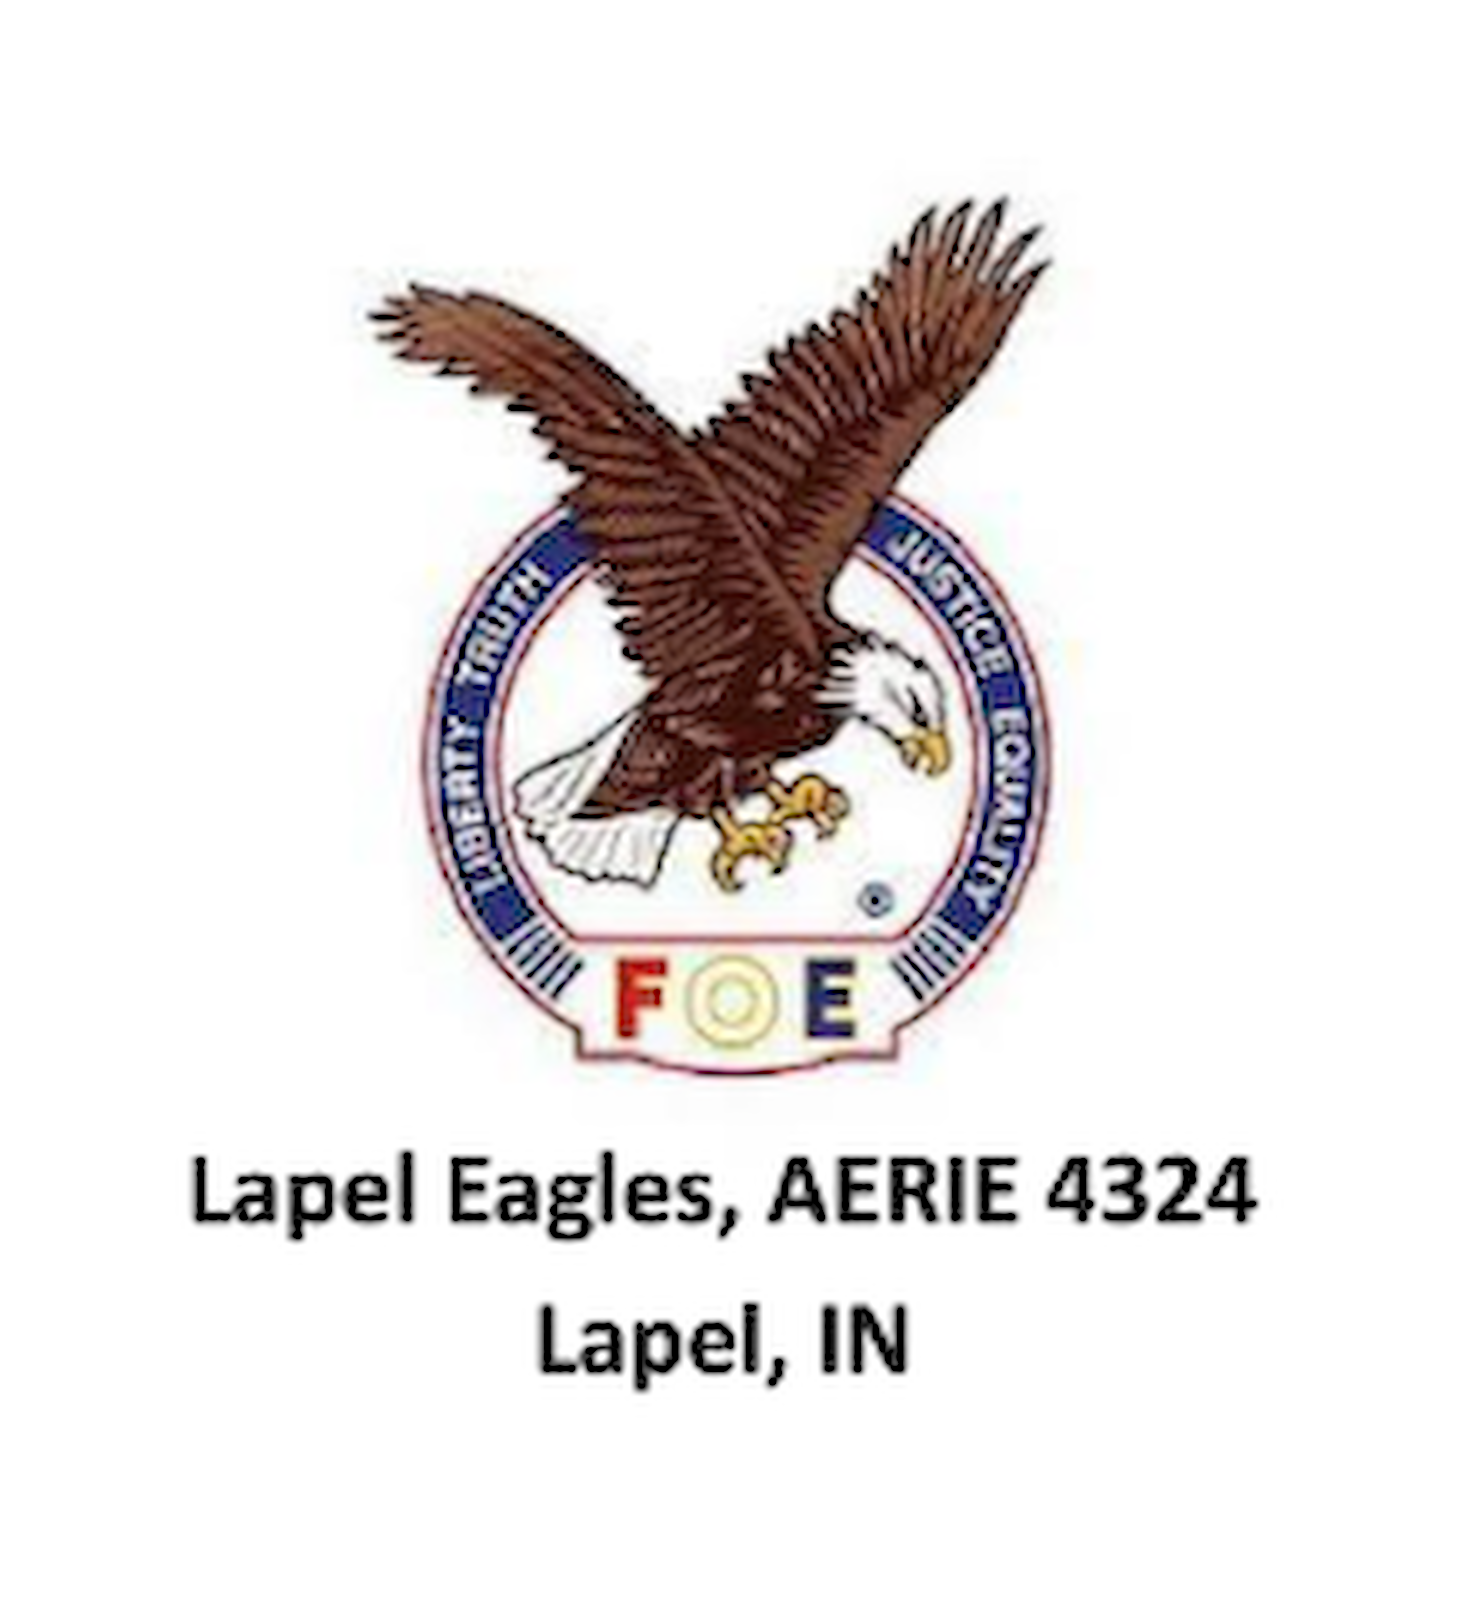 Lapel Eagles, AERIE 4324